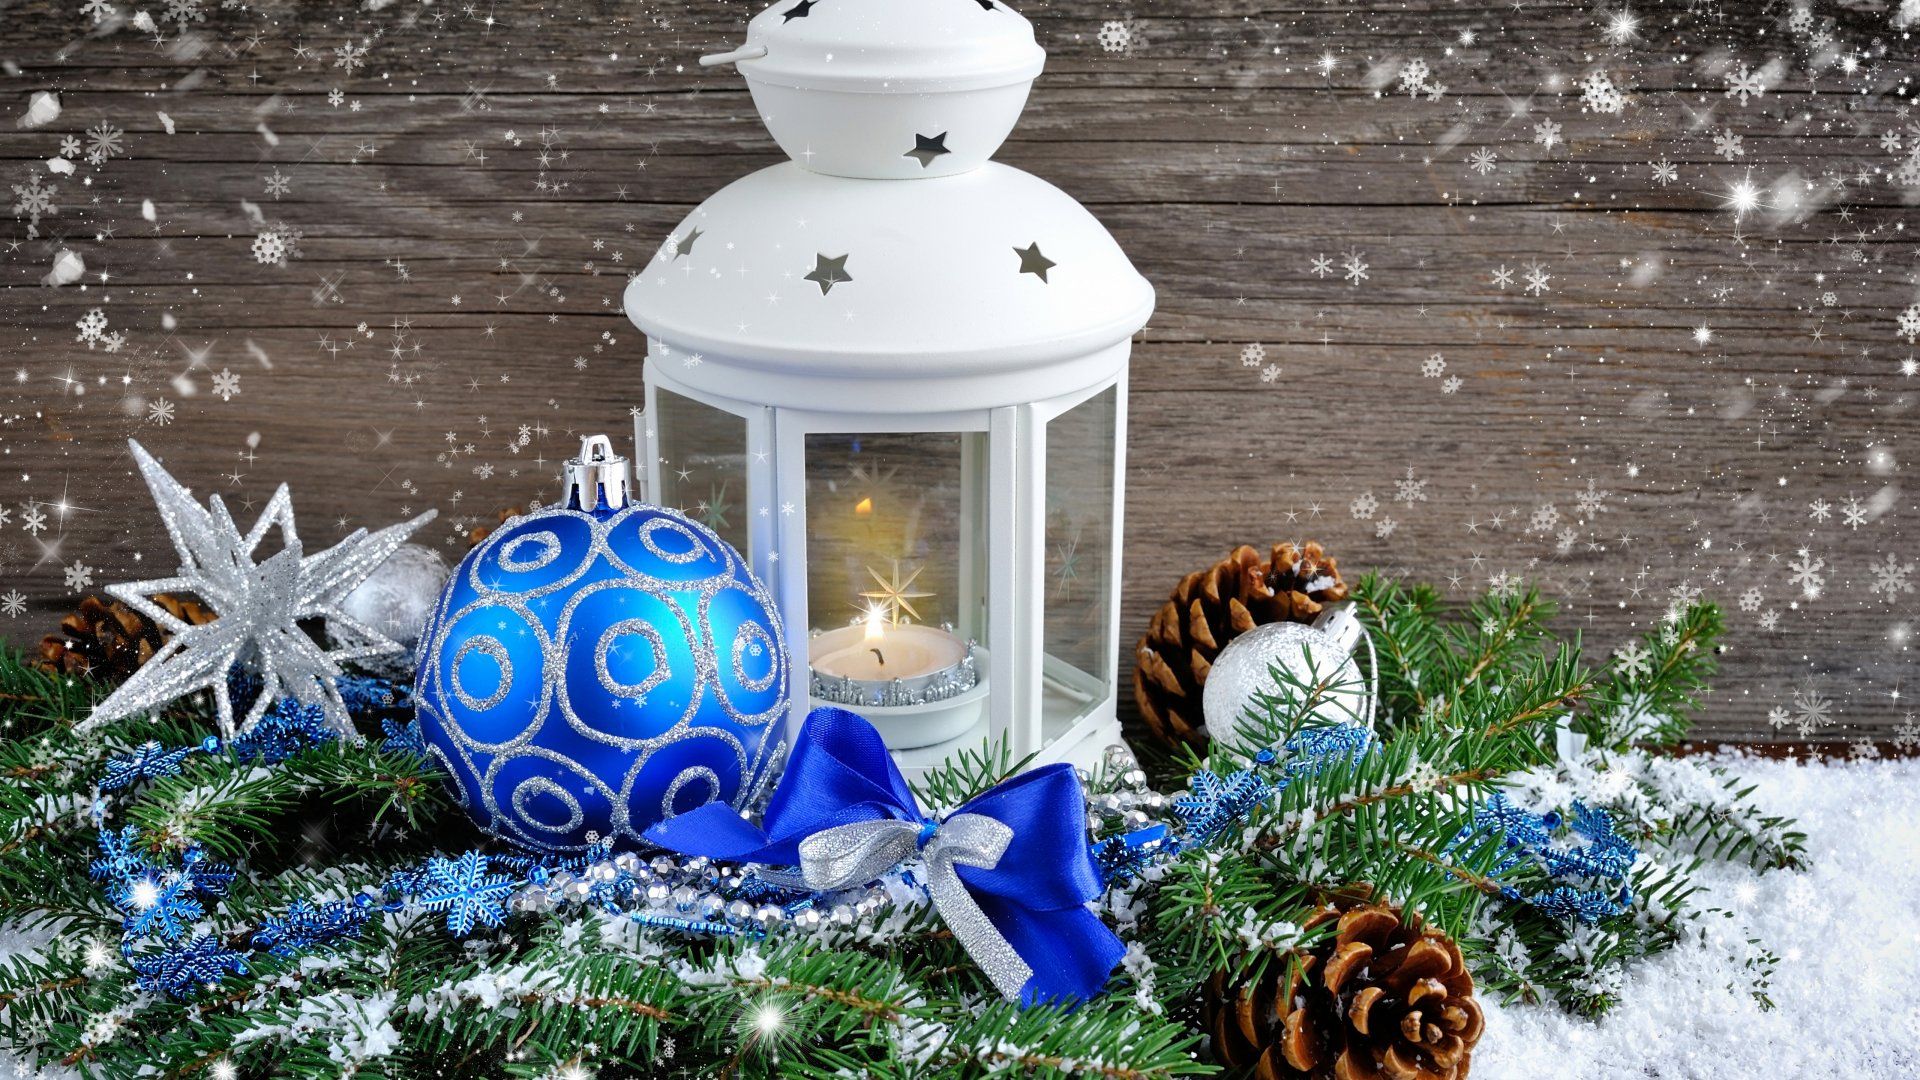 Download desktop wallpaper Winter Snow Merry Christmas Decoration Lantern 1920x1080